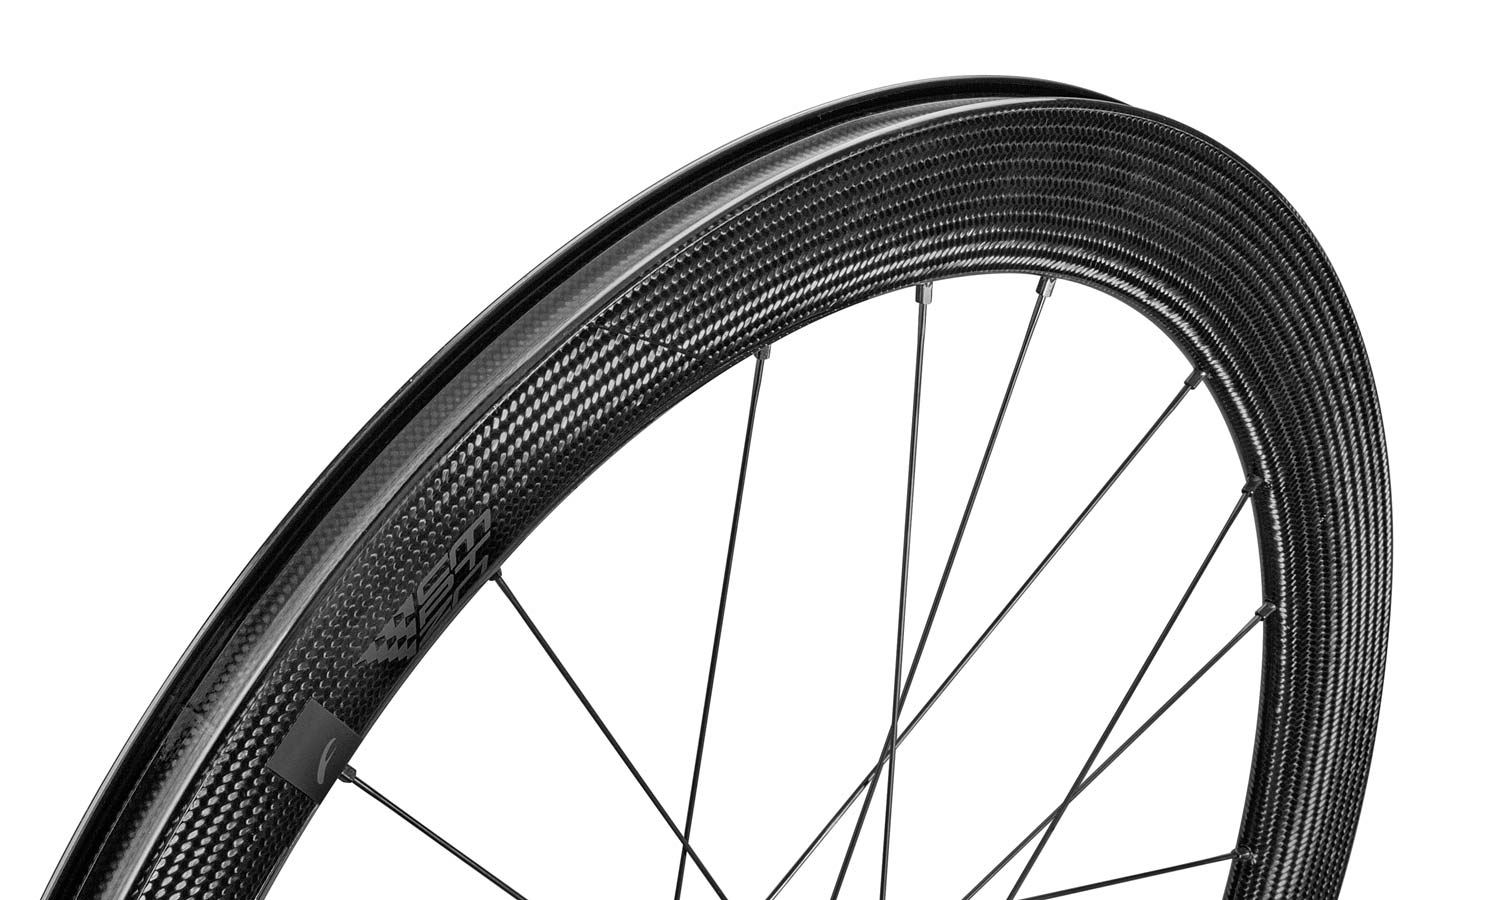 2021-Fulcrum-Speed-CMPTZN-40-55-DB-aero-carbon-road-wheels_55mm-40mm-aerodynamic-carbon-tubeless-disc-brake-road-bike-race-wheels_rim-detail.jpg